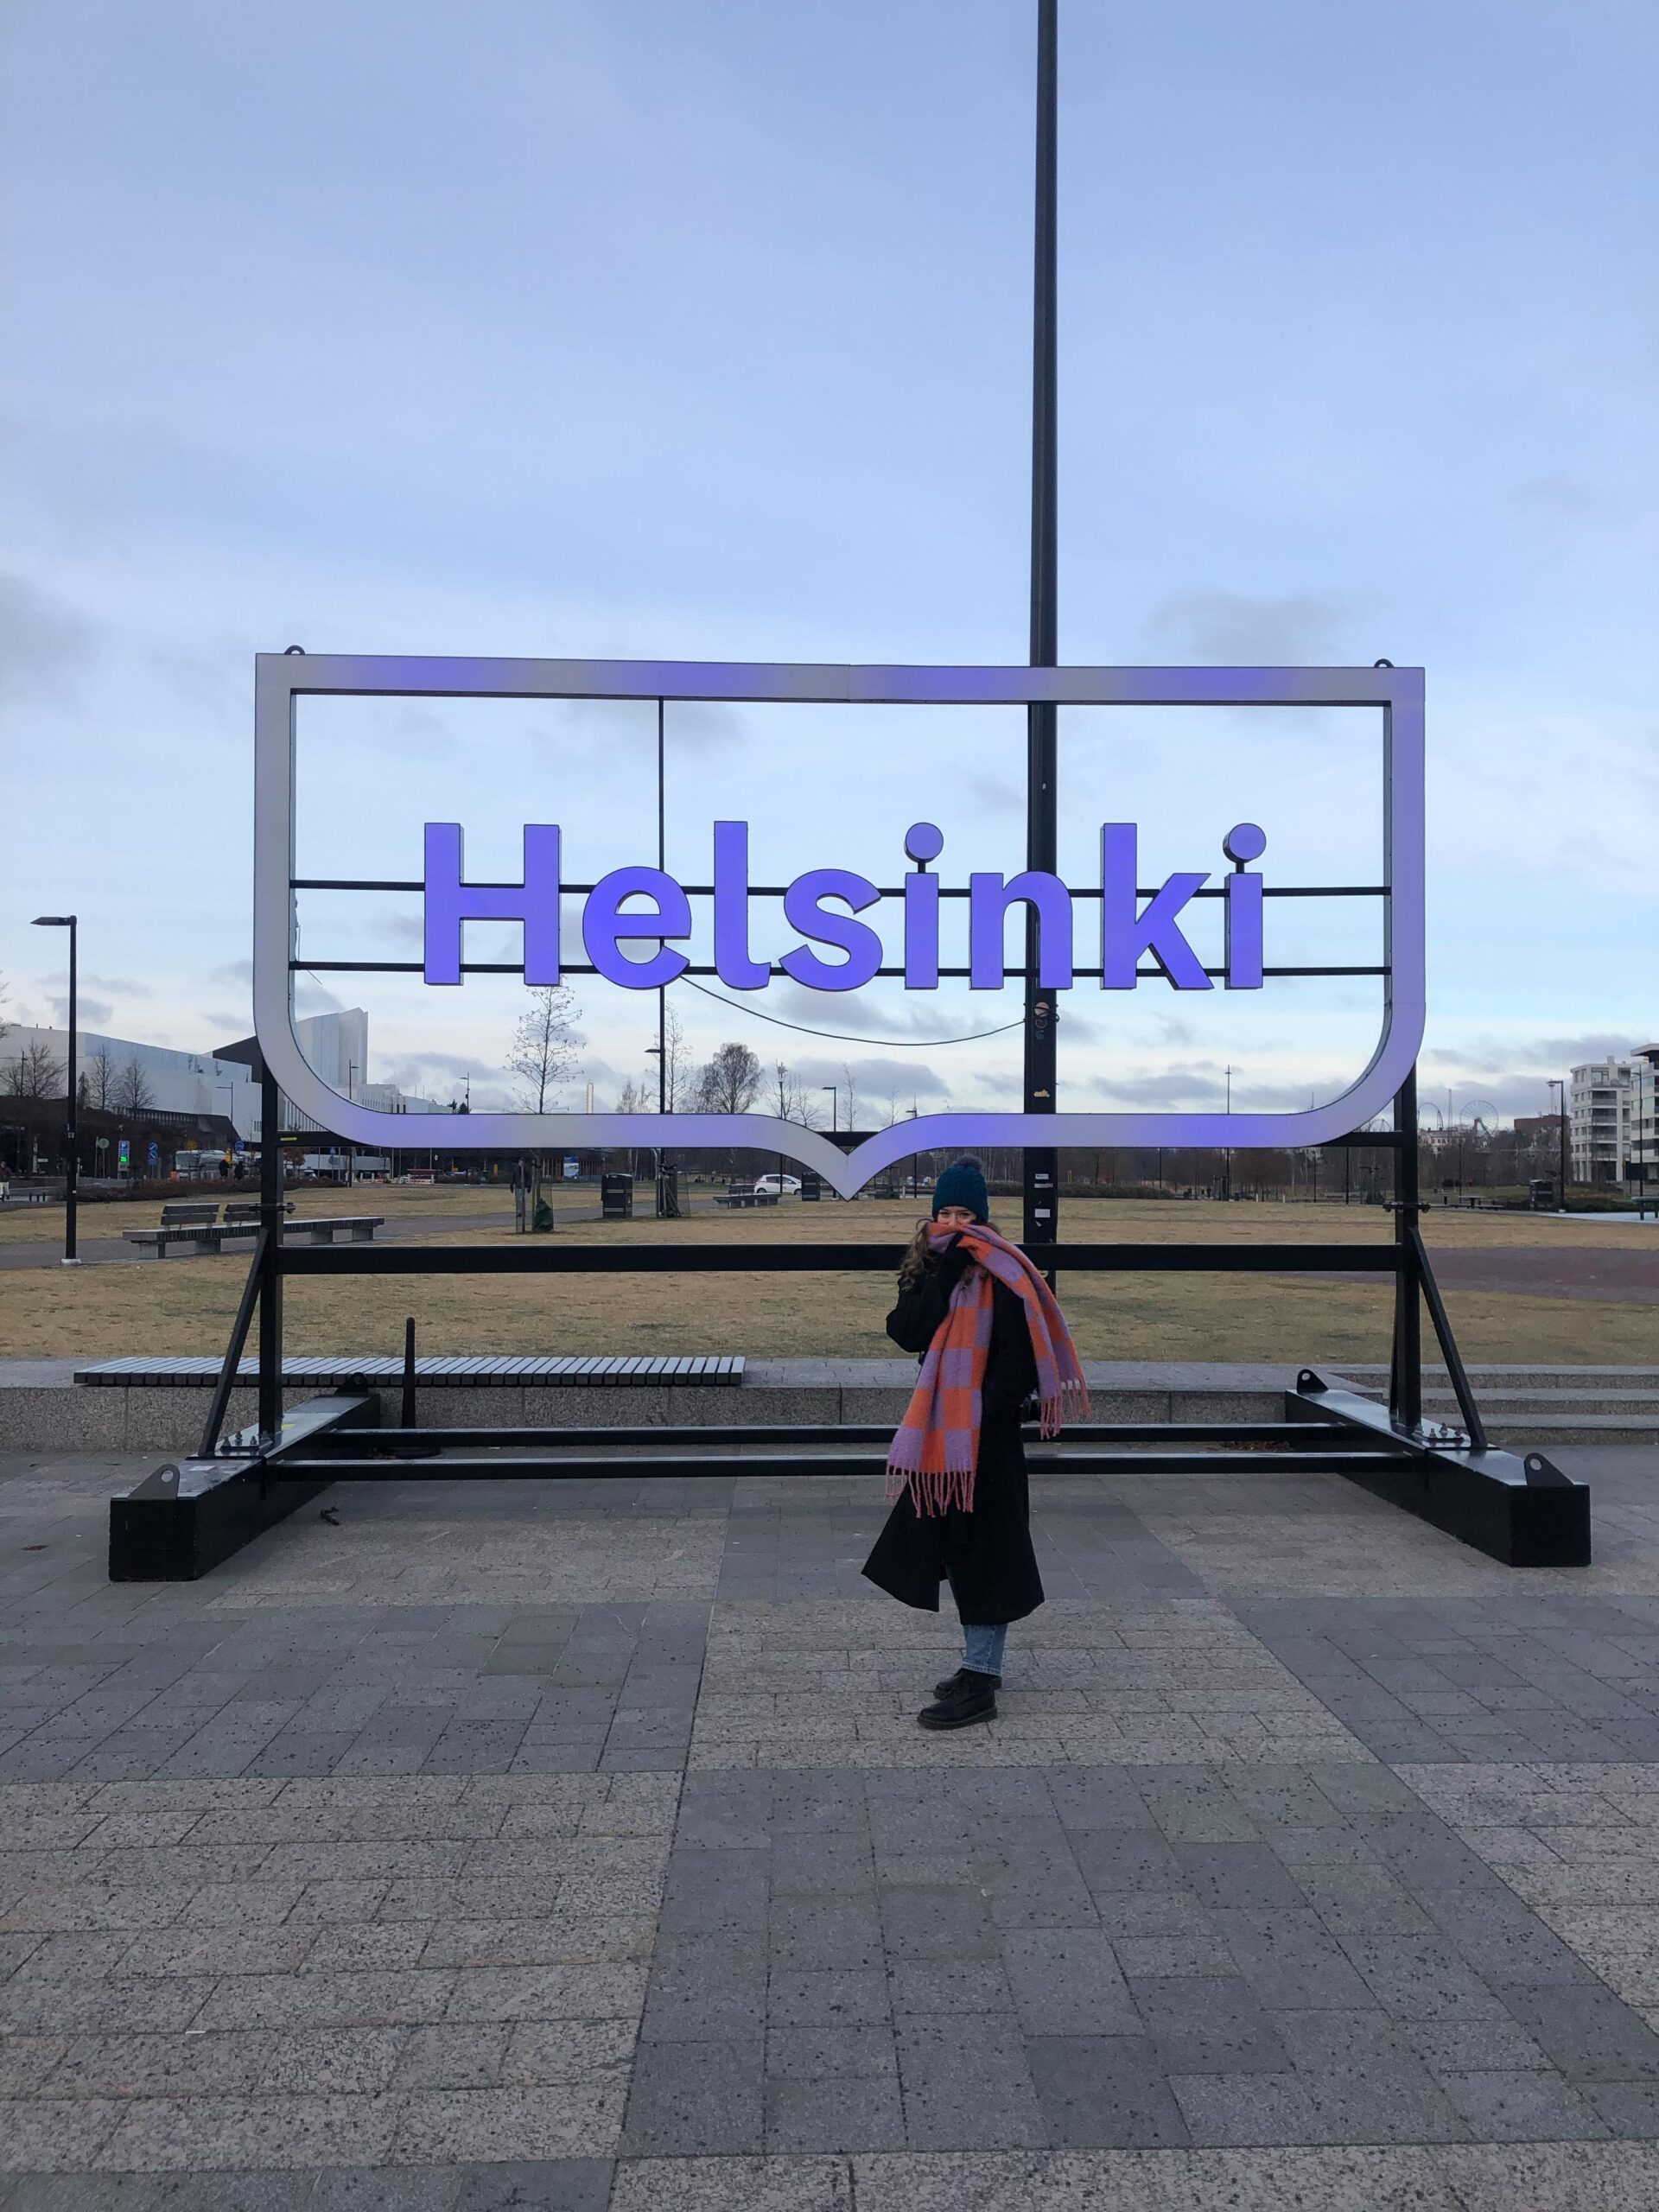 The Helsinki Sign